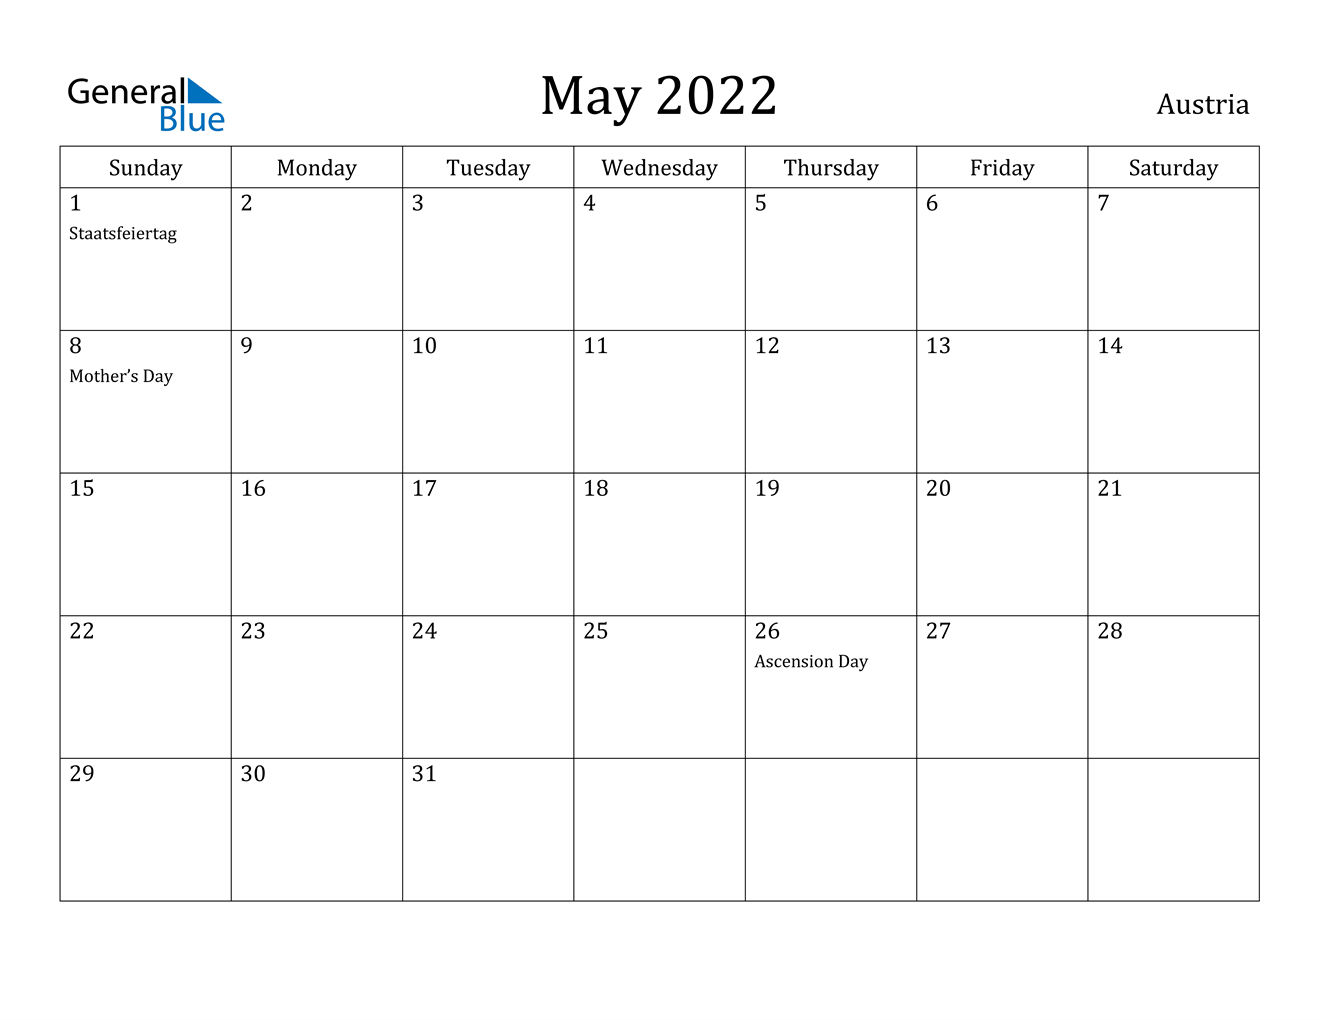 May 2022 Calendar - Austria